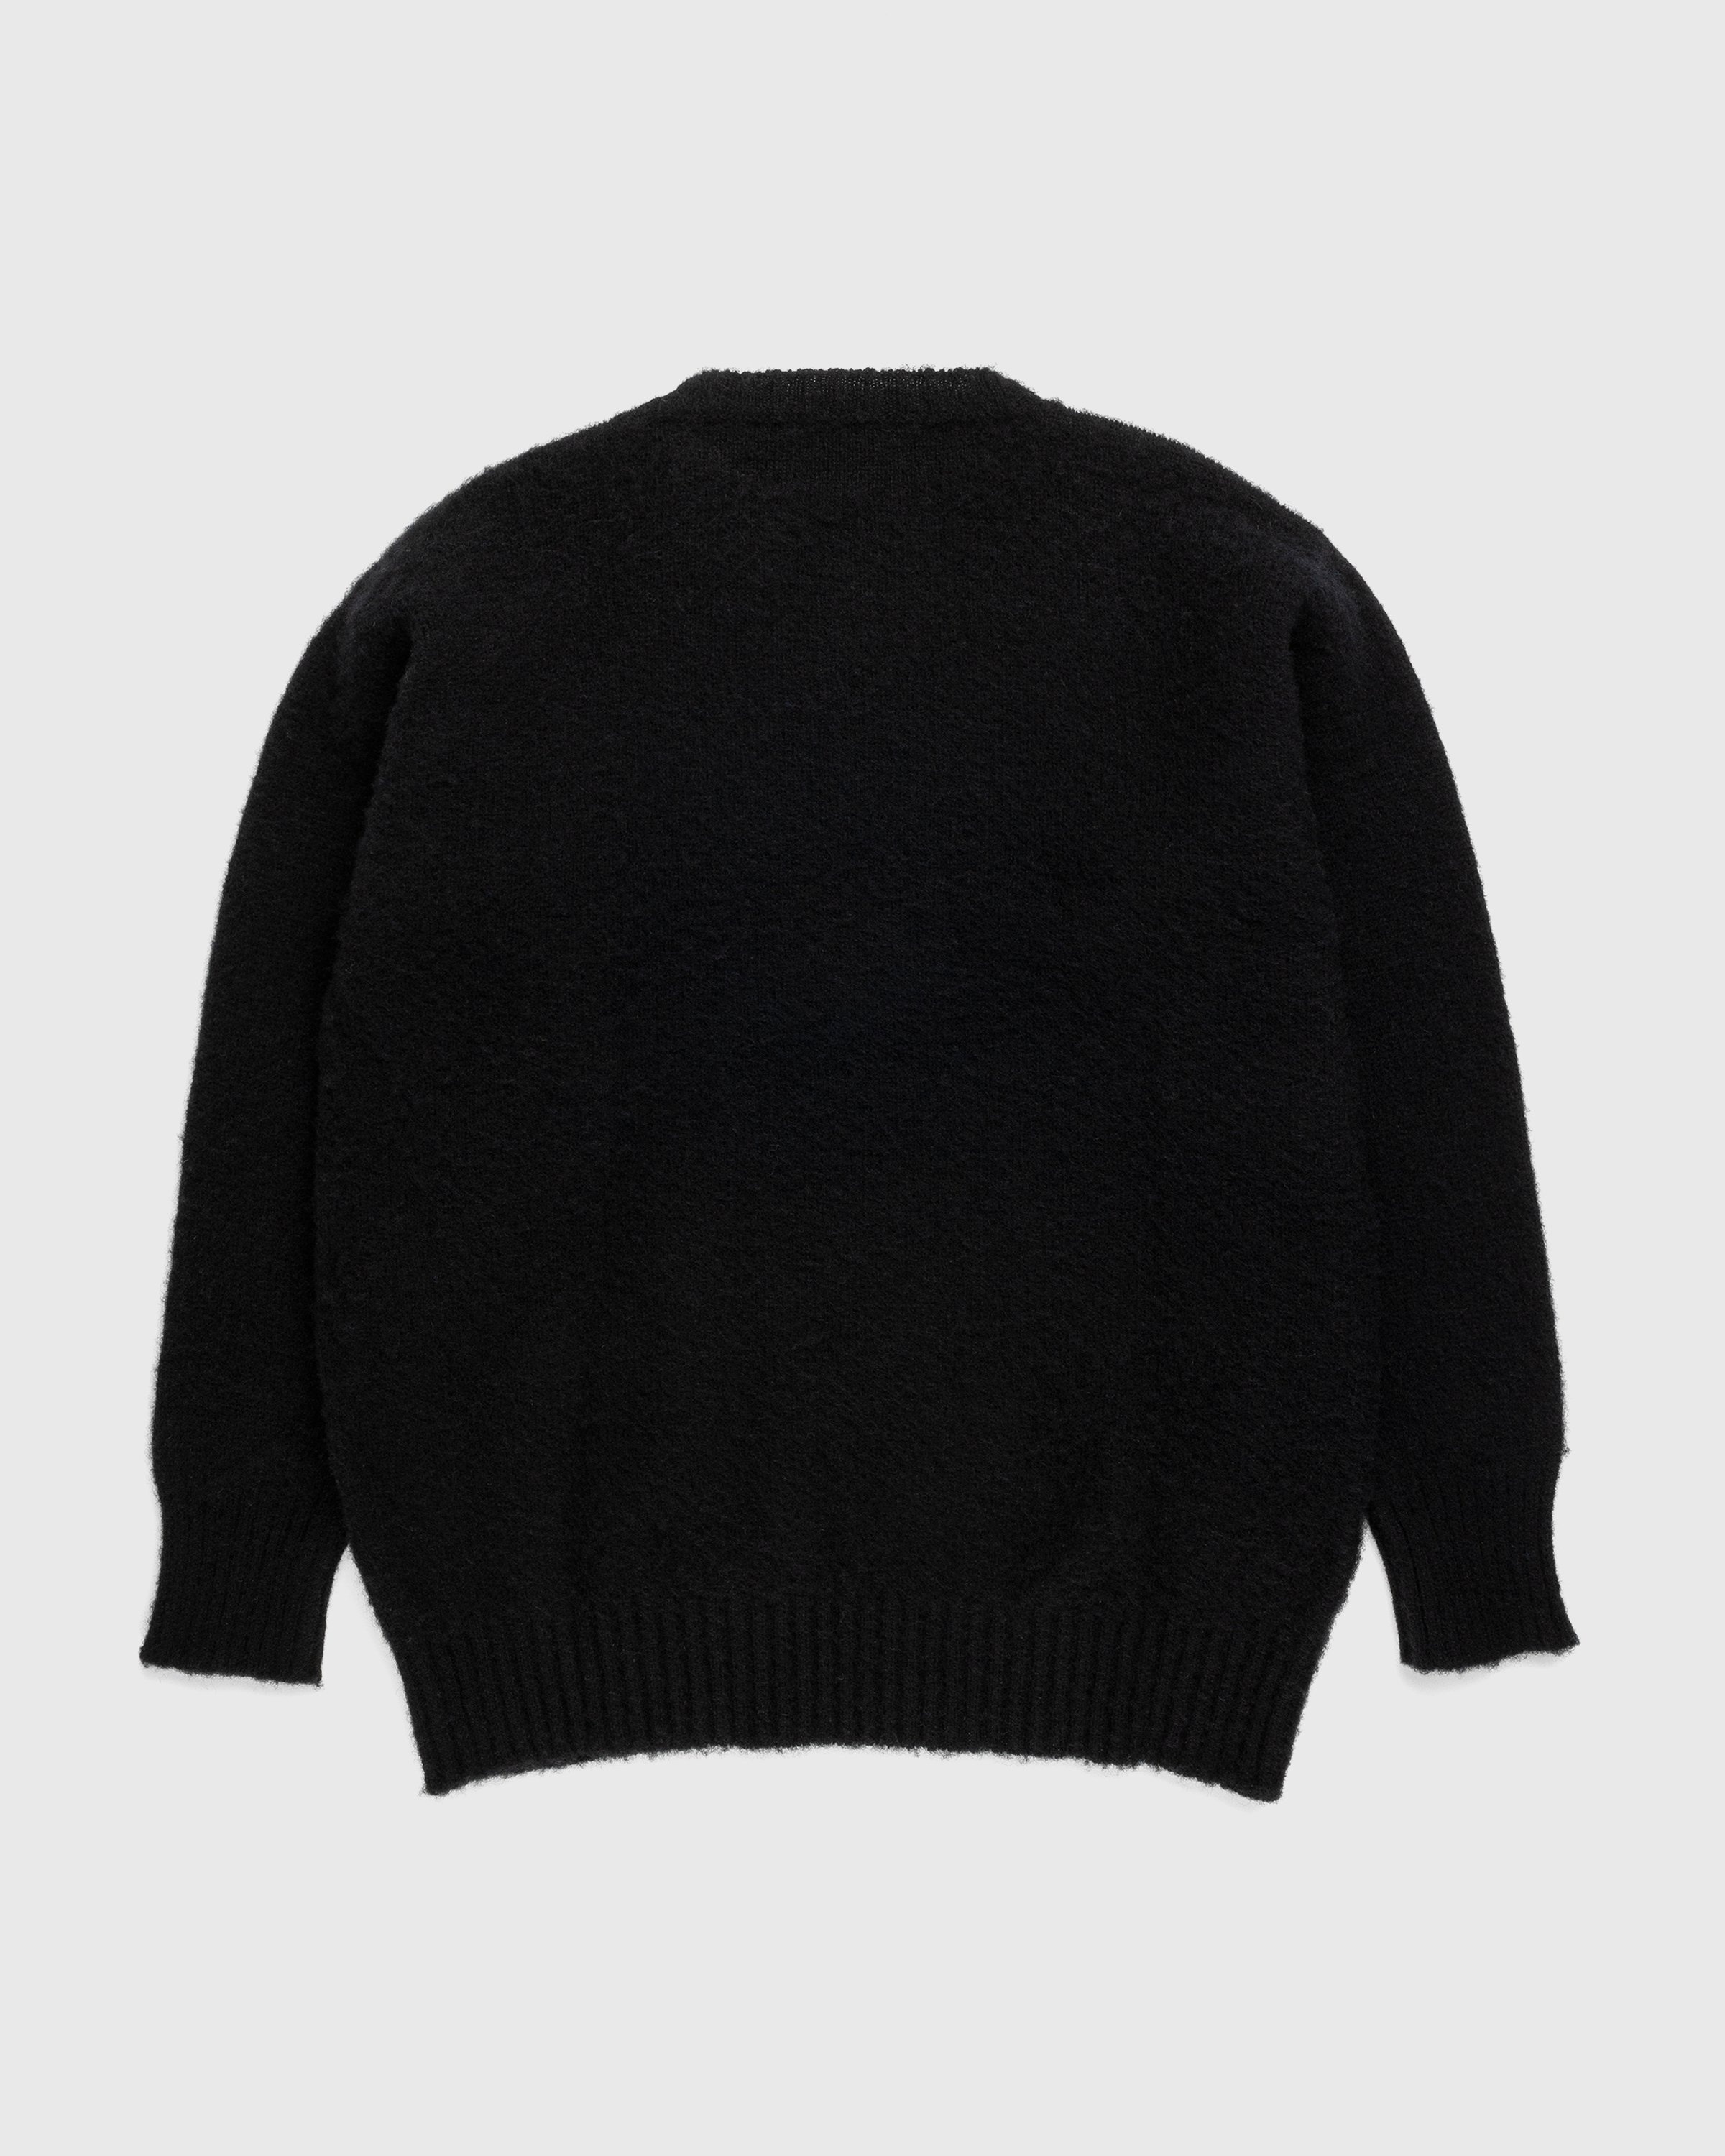 J. Press x Highsnobiety – Shaggy Dog Solid Sweater Black - Knitwear - Black - Image 2